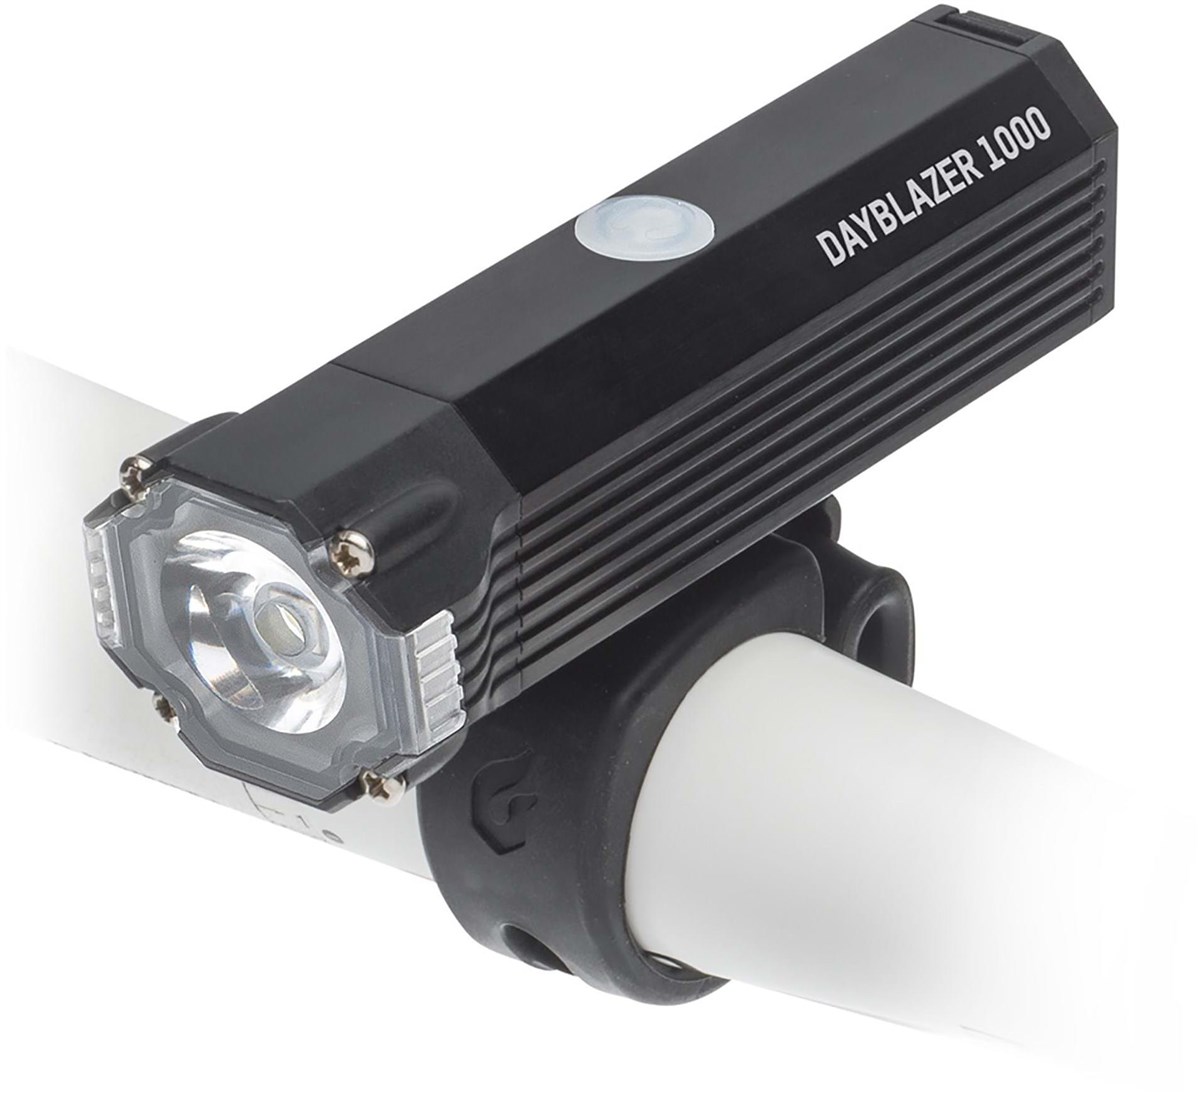 Blackburn Dayblazer 1000 Micro-USB Rechargeable Front Light product image